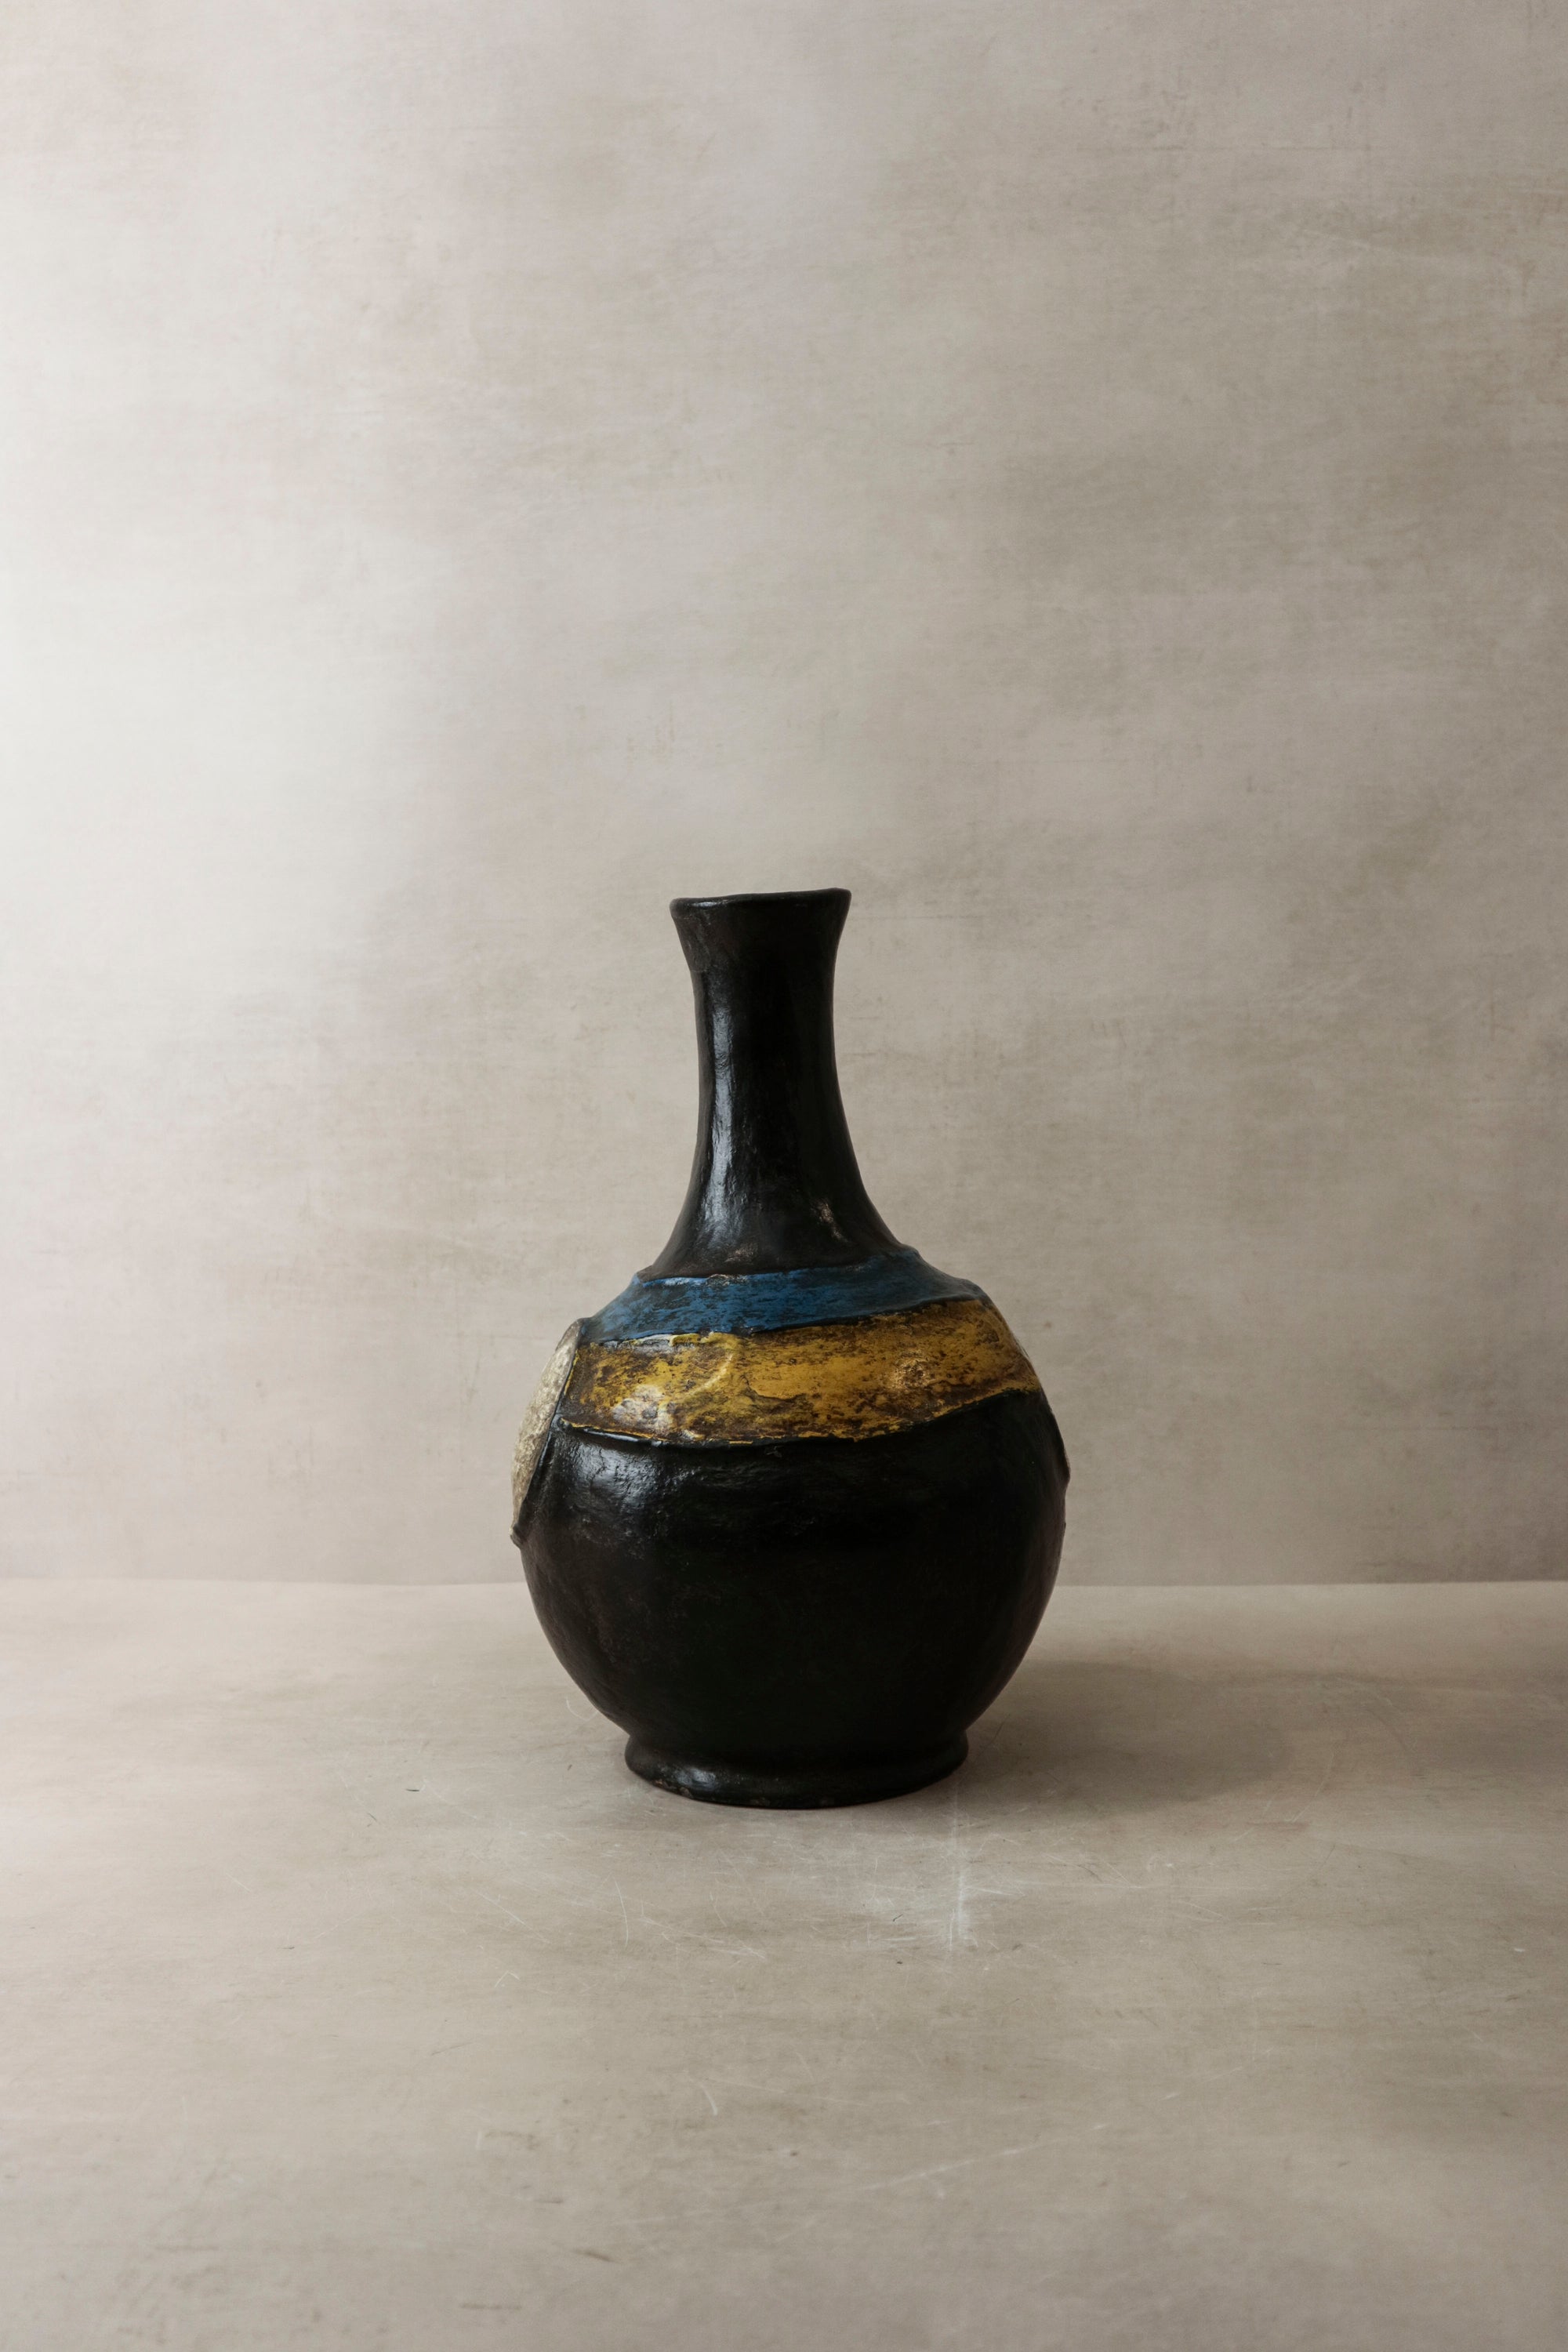 Mangbetu Clay Vase, Tanzania - 41.1